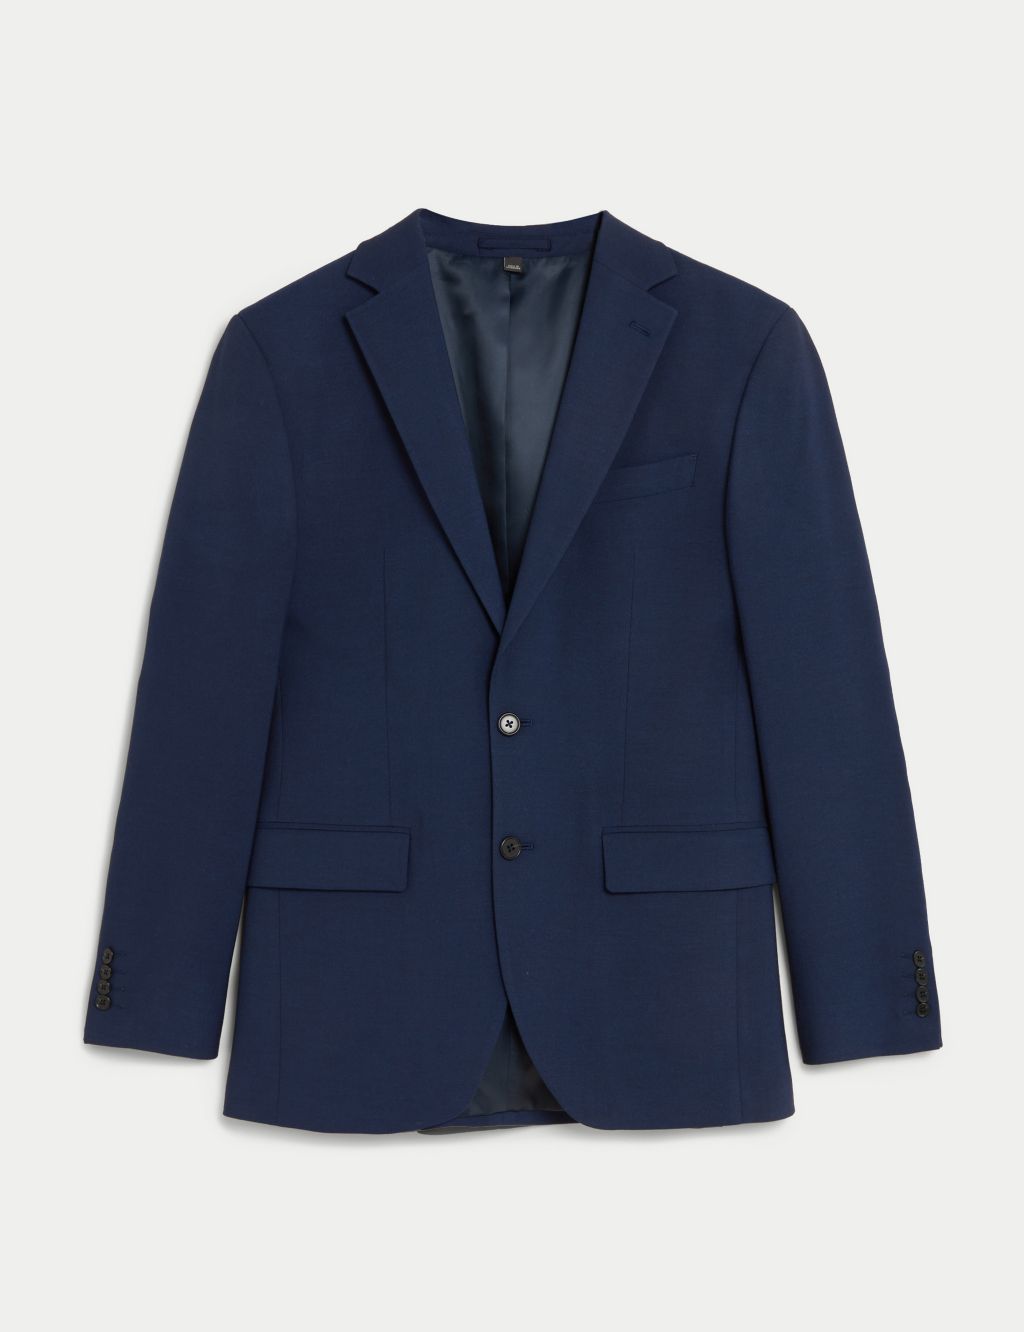 Regular Fit Suit Jacket image 1